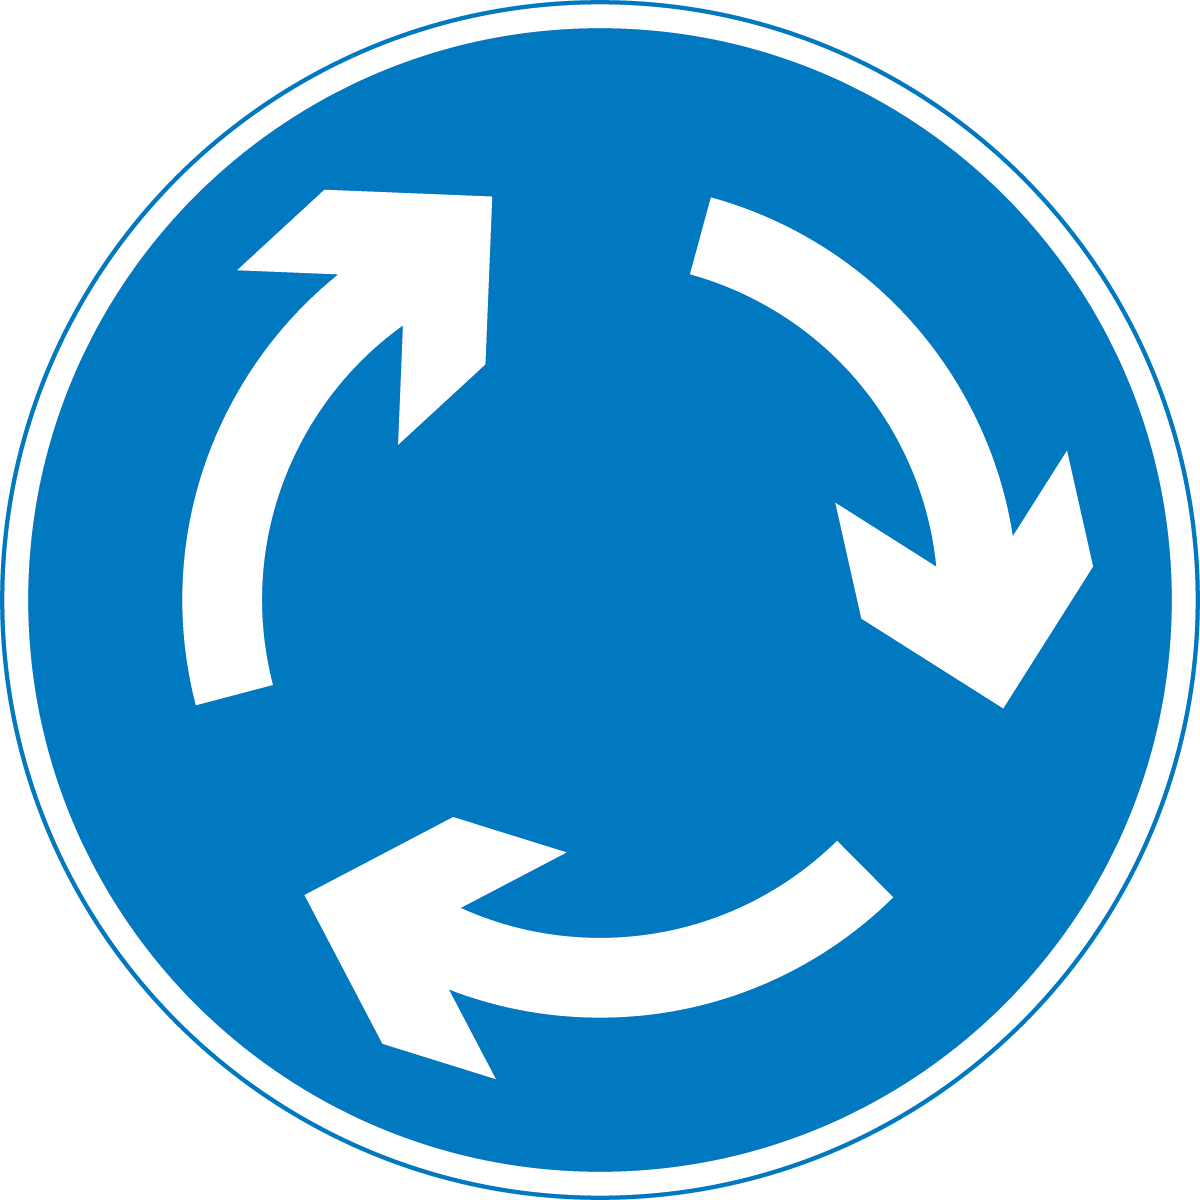 Mini roundabout sign - Theory Test